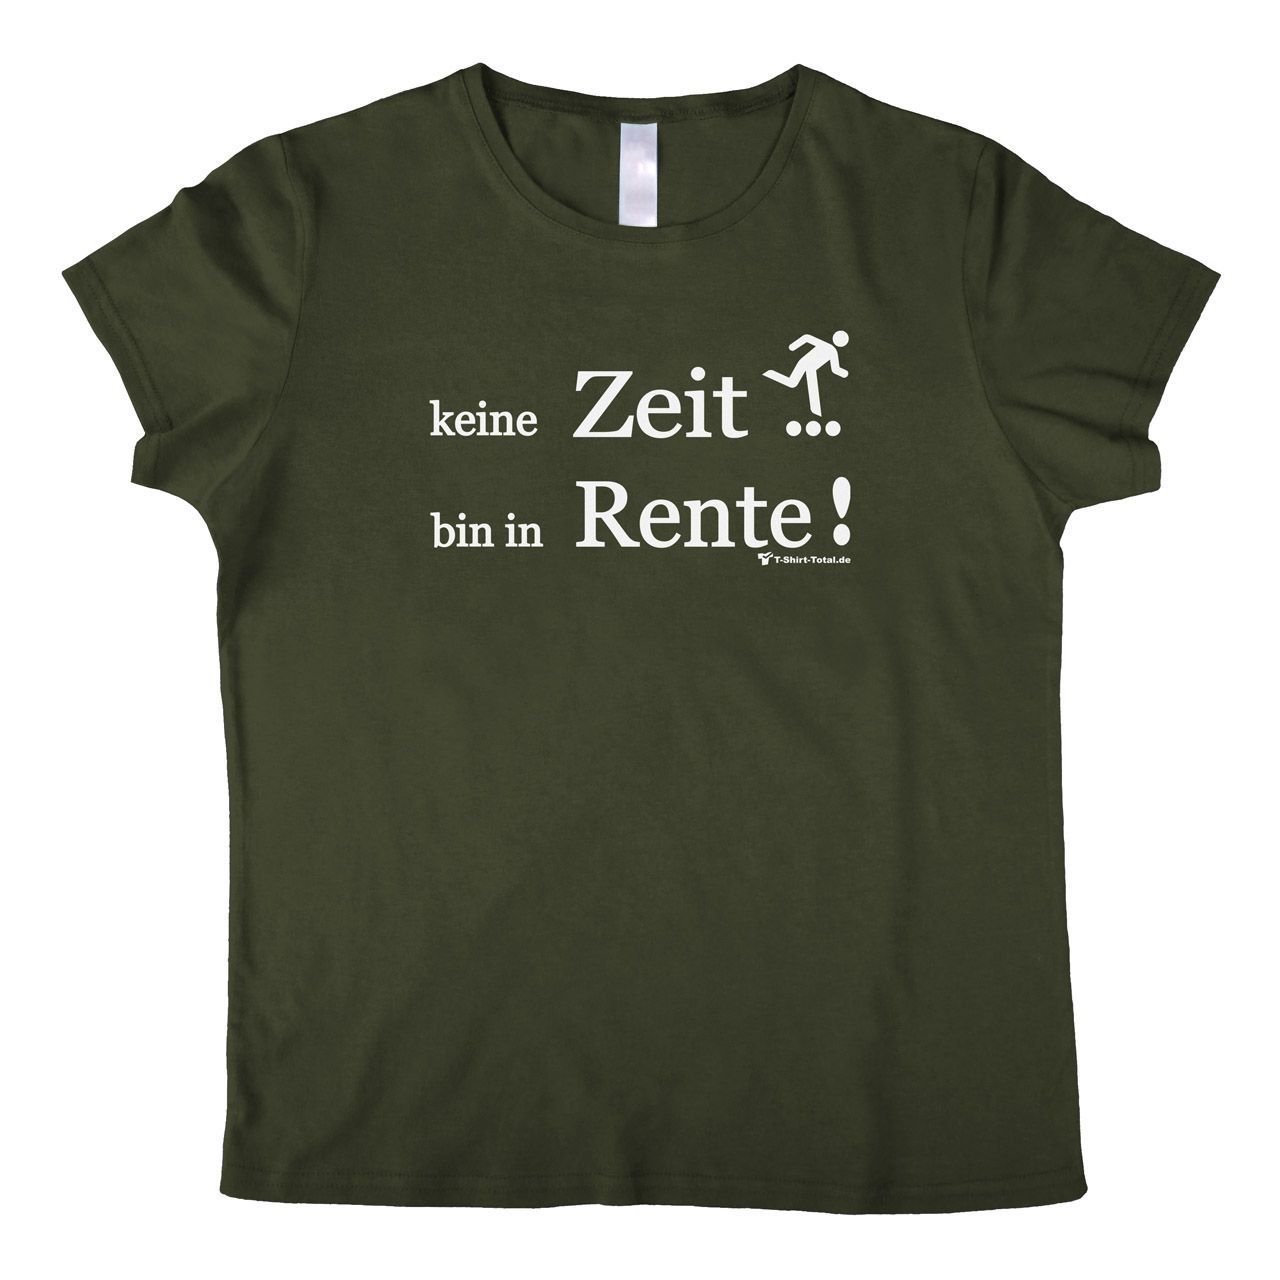 Bin in Rente Woman T-Shirt khaki Extra Large